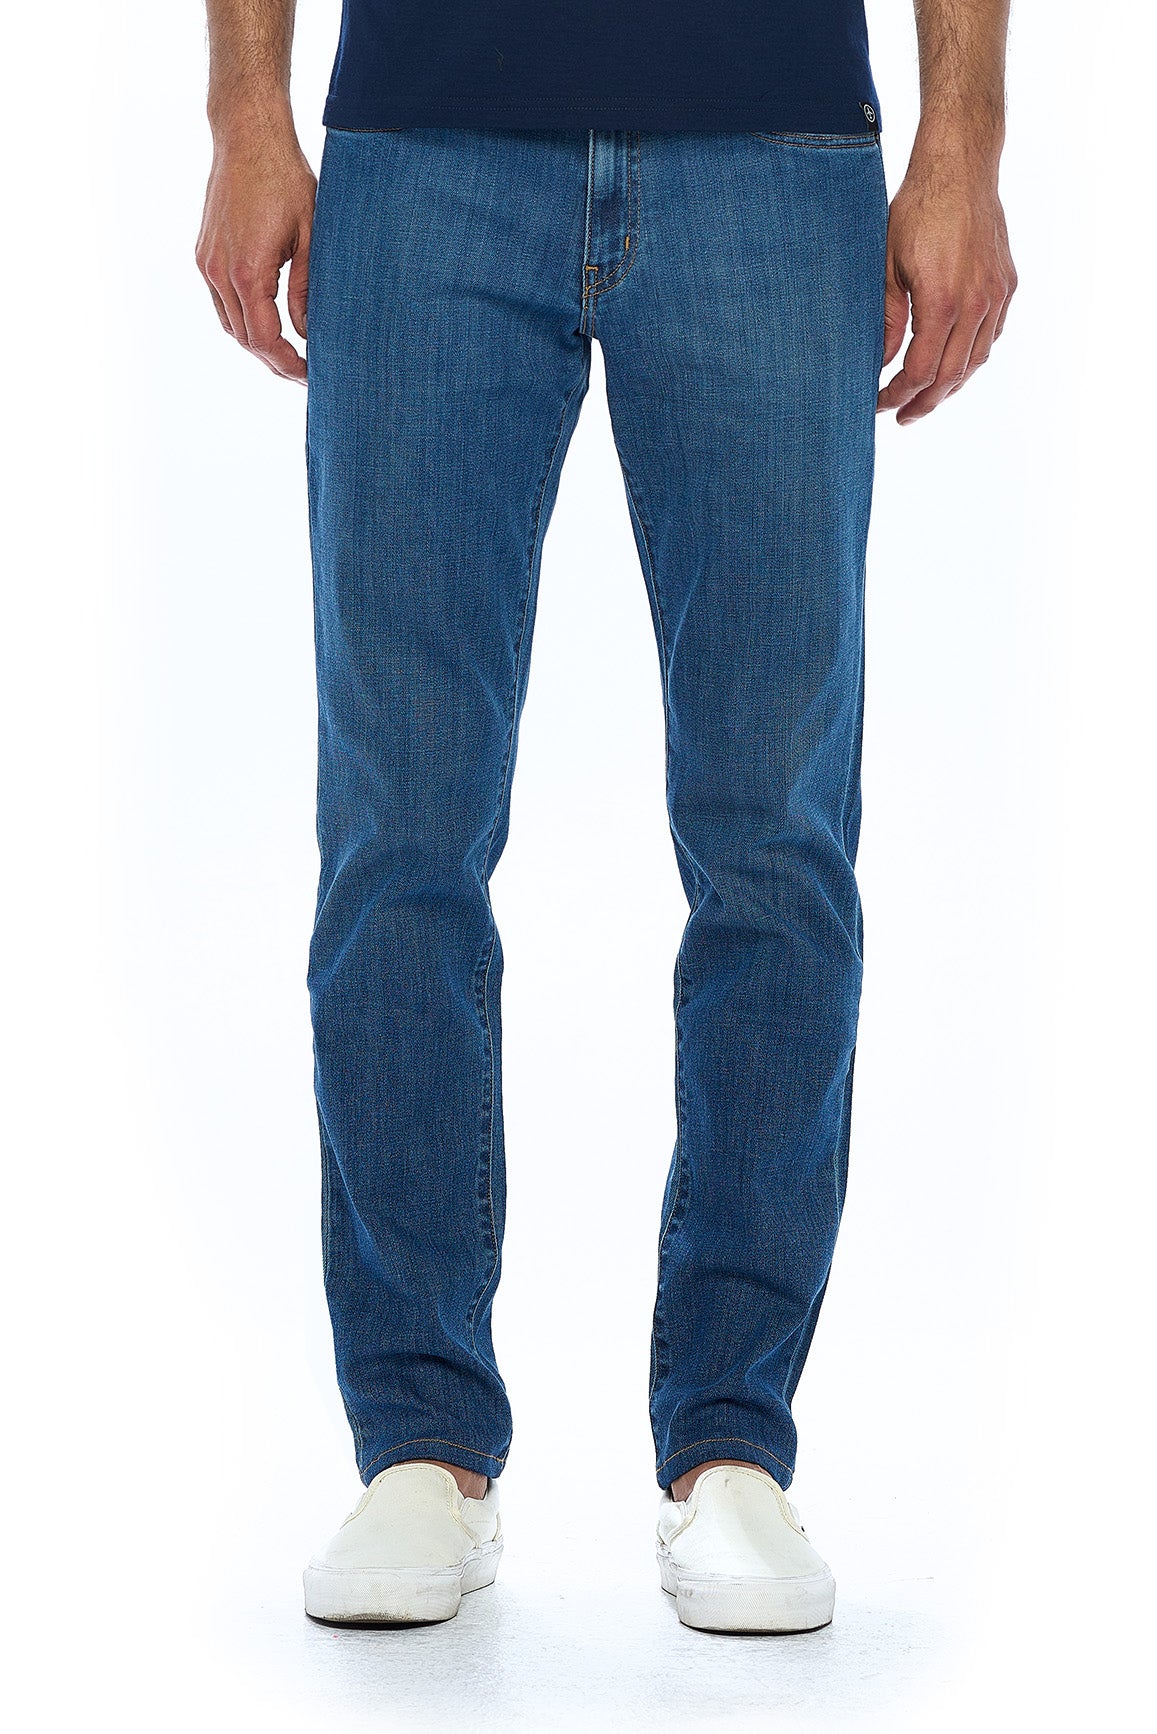 Aviator men's vintage indigo travel jeans